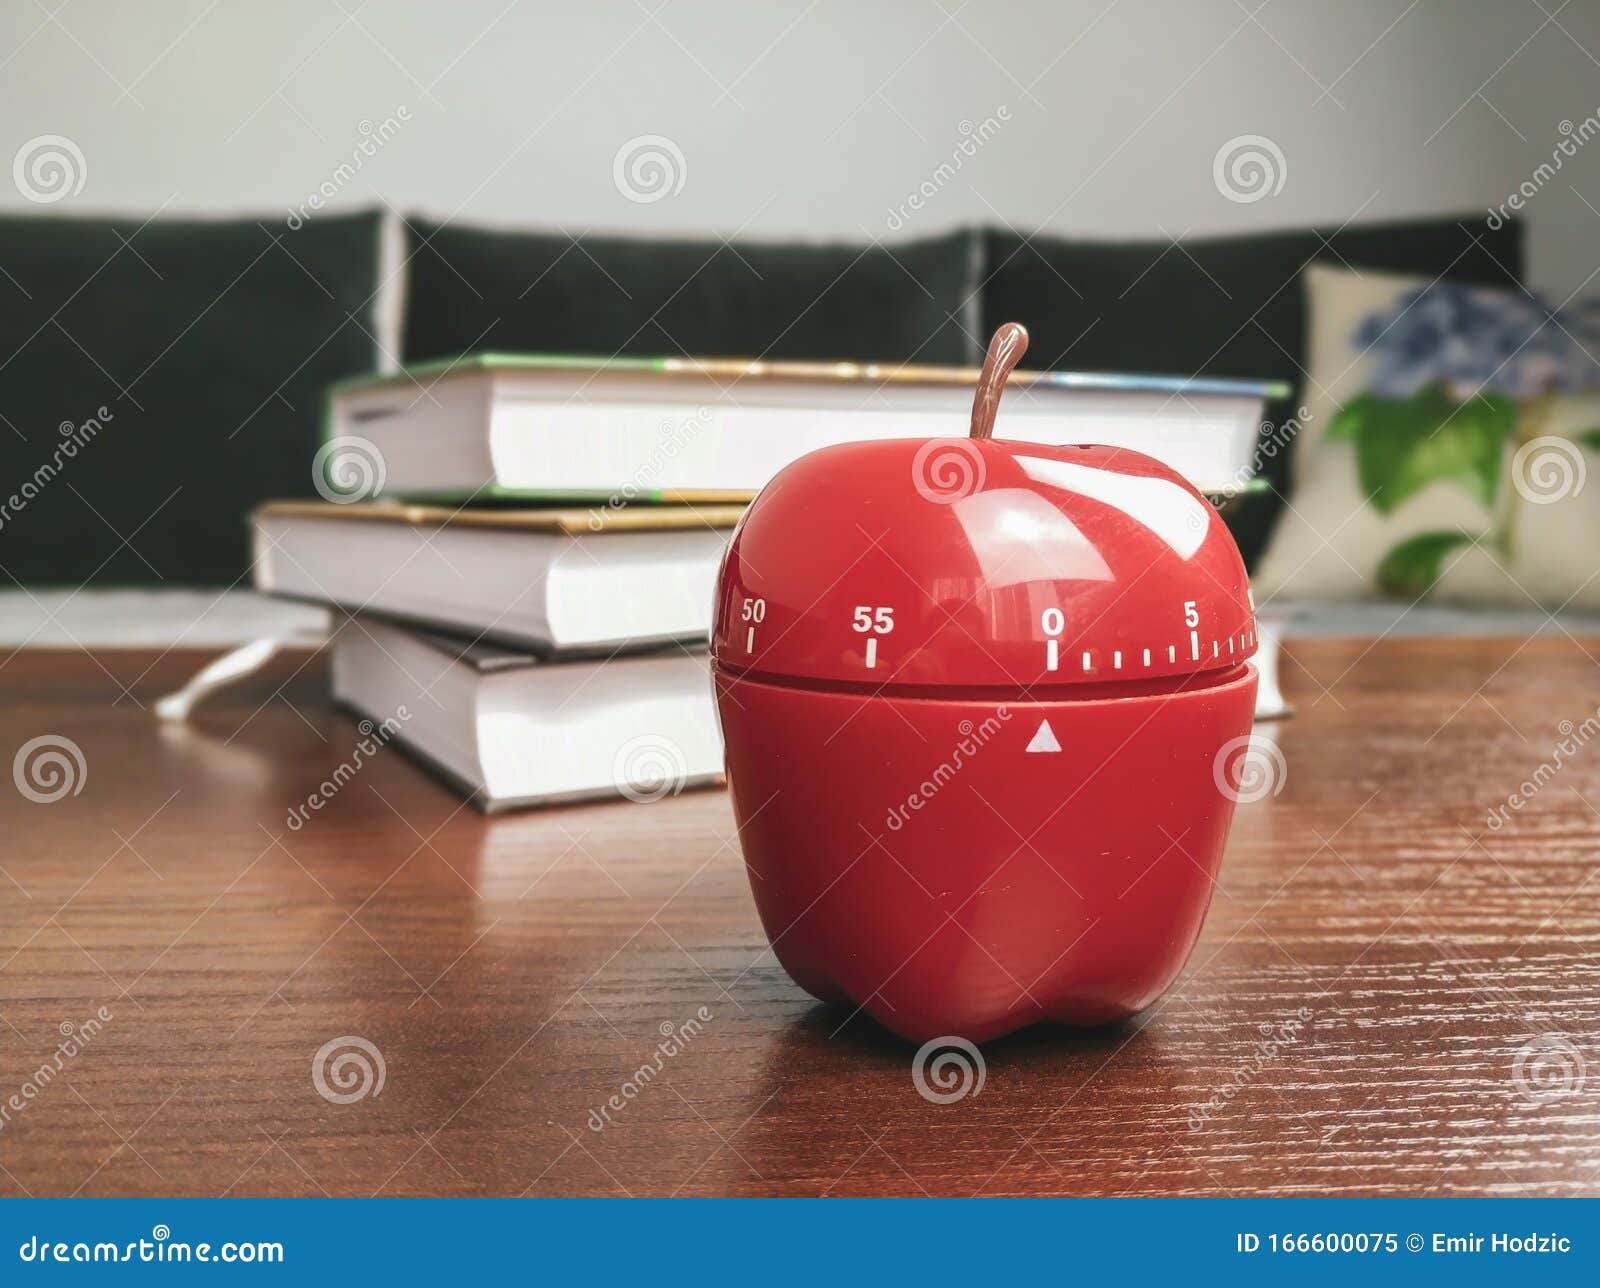 pomodoro apple watch